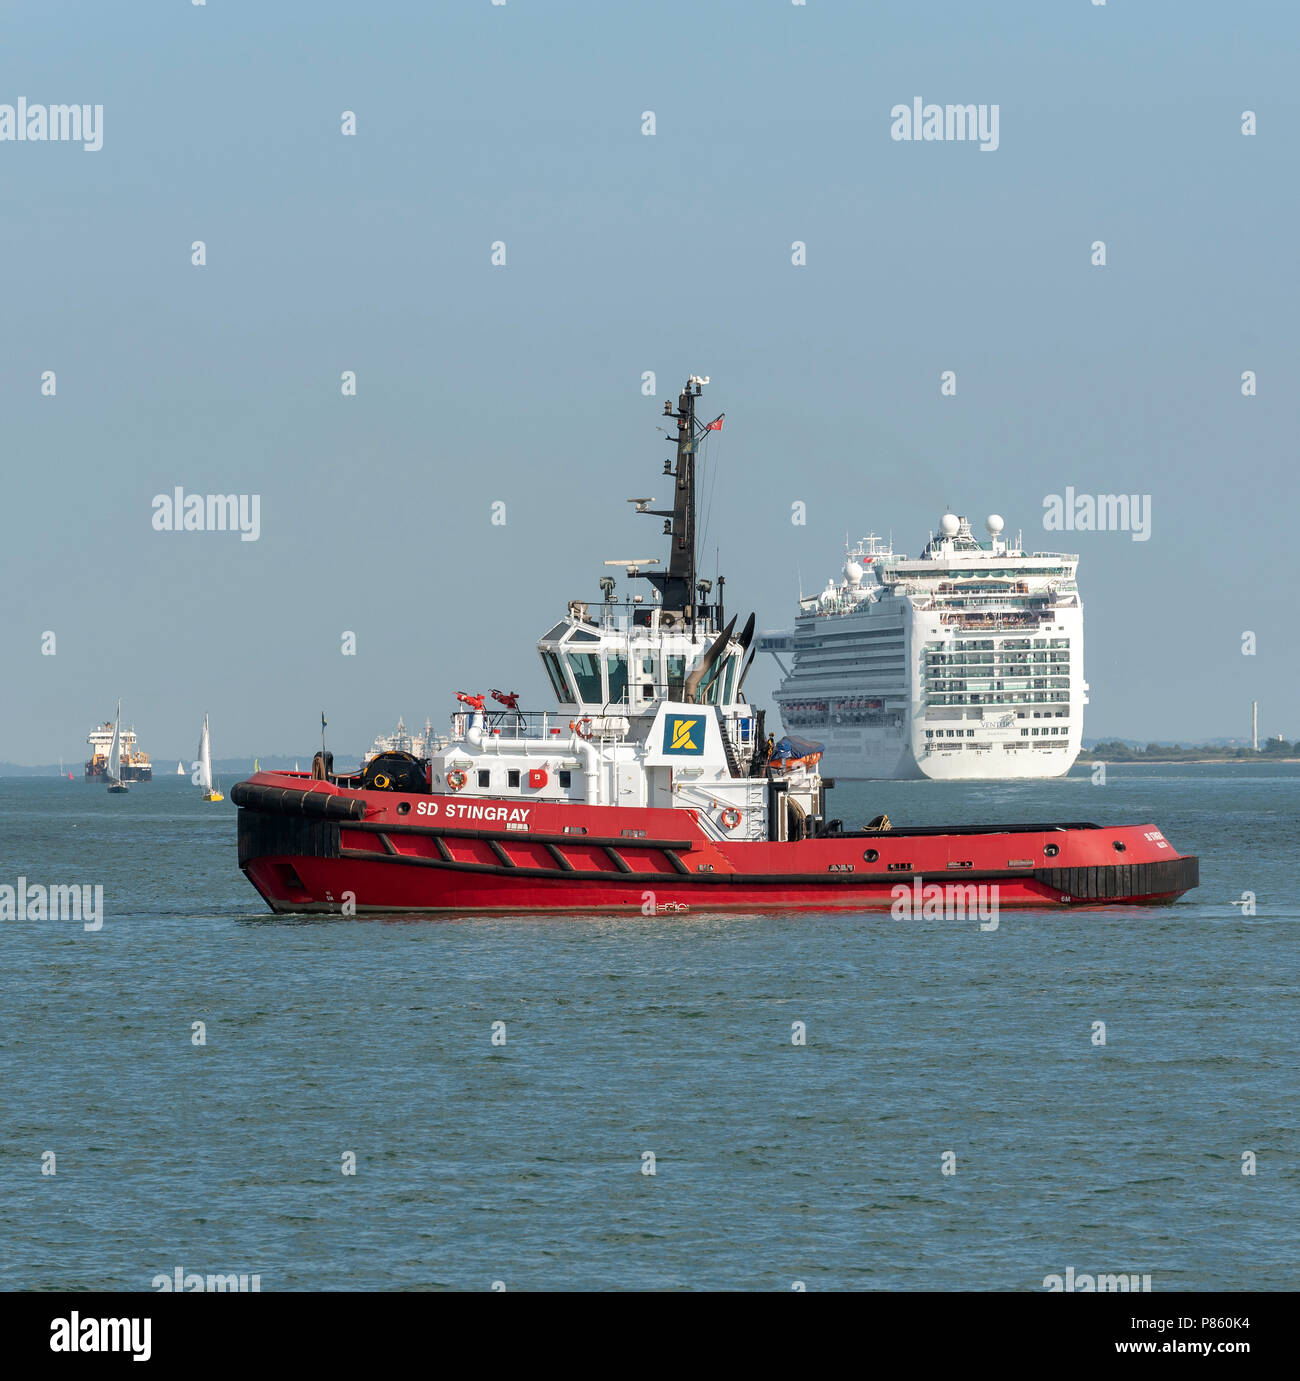 The SD Stingray an ocean going tug on Southampton Water, England UK Stock Photo